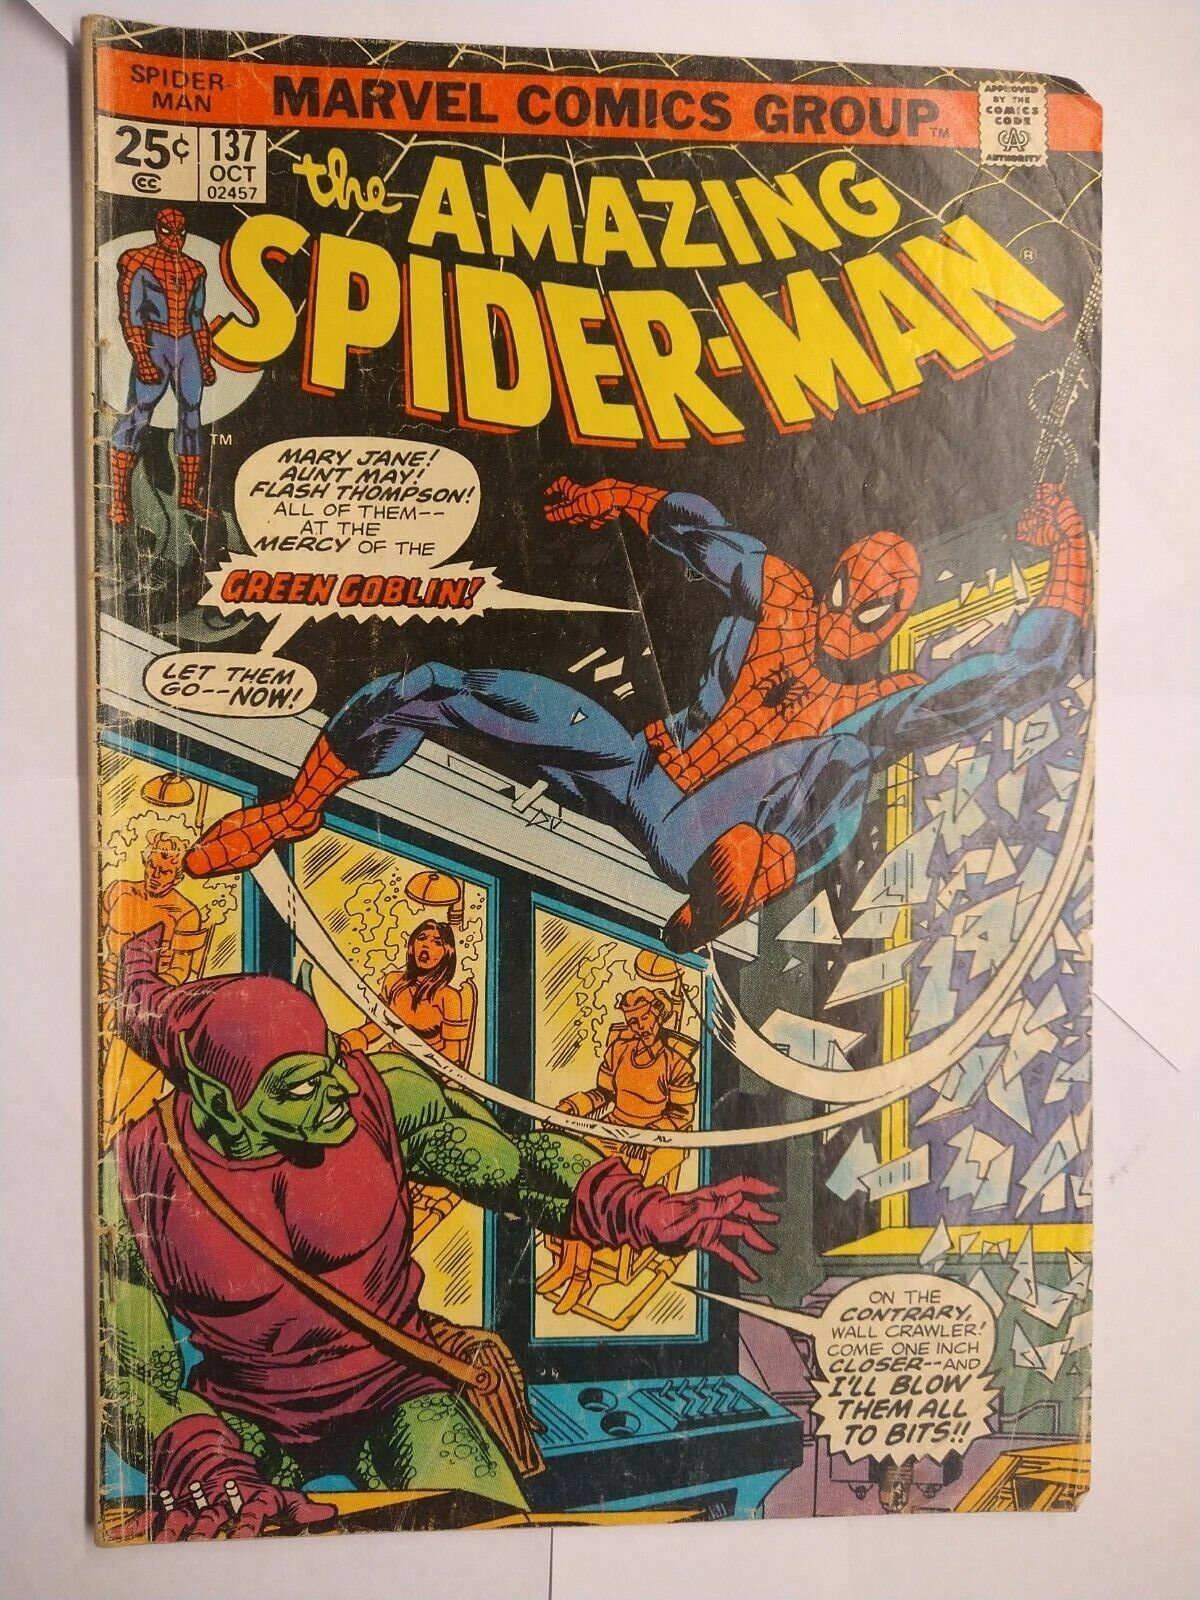 Amazing Spider-Man #137 Green Goblin